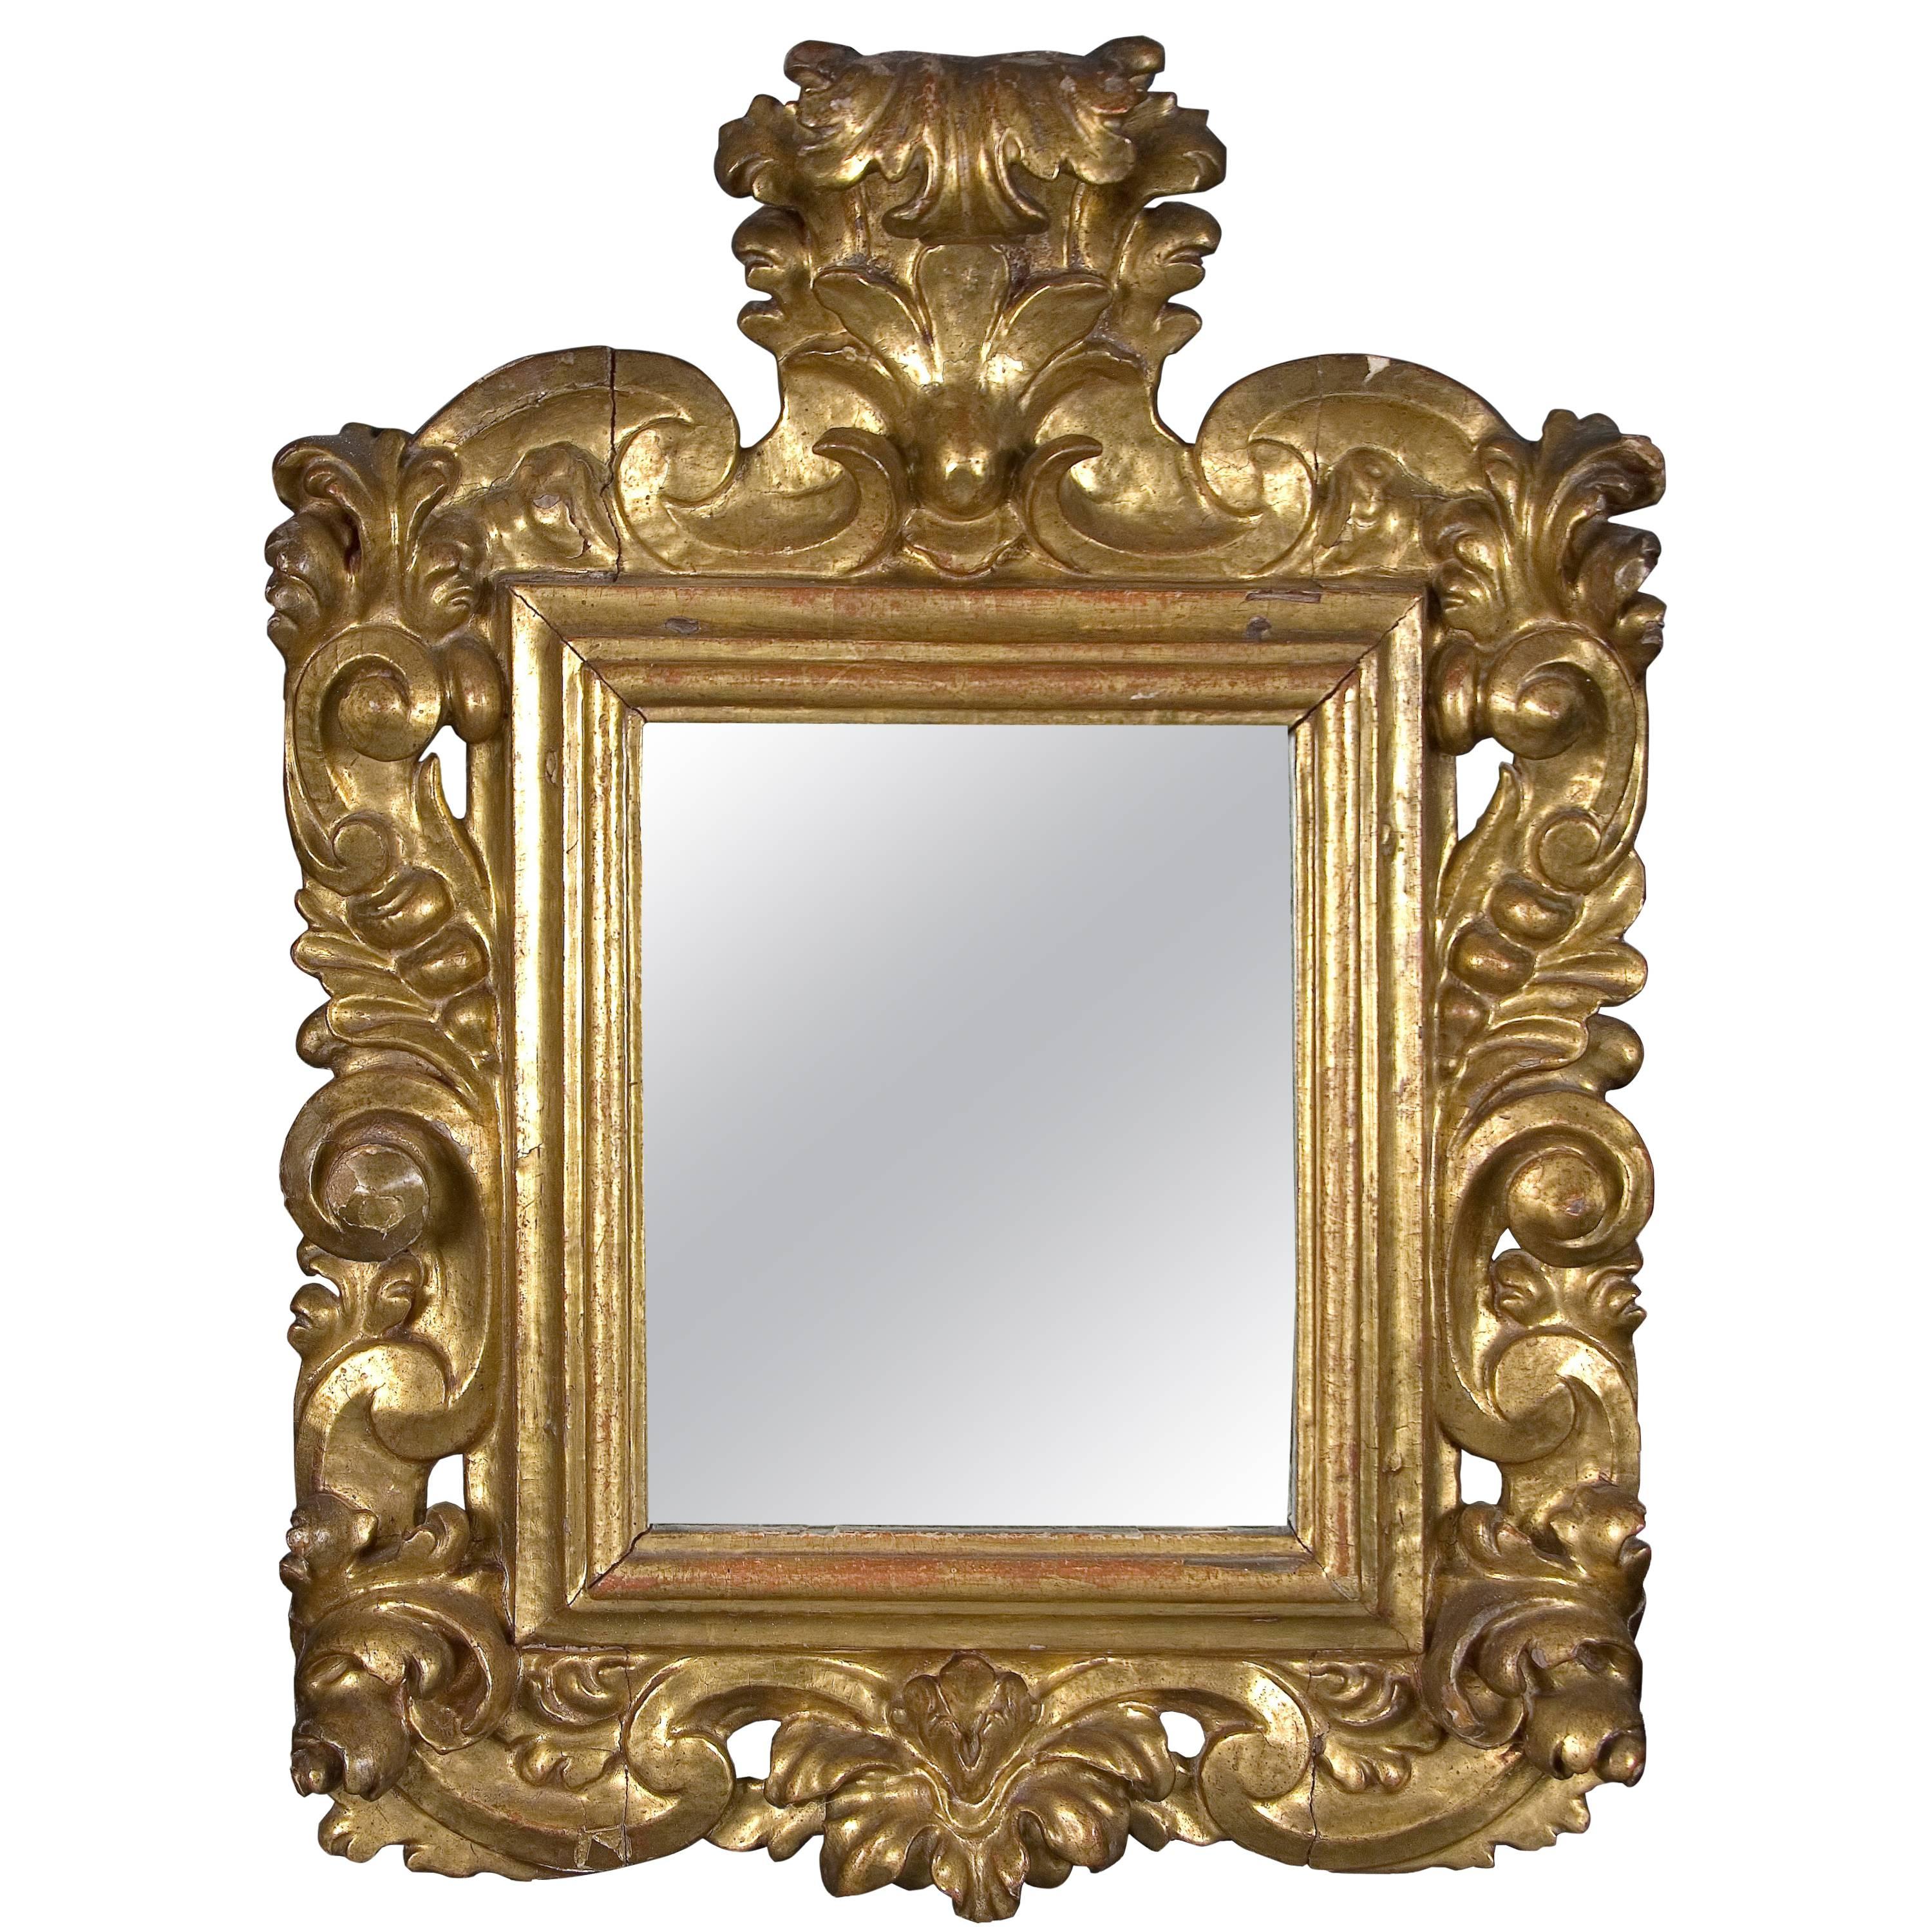 Petit miroir ornemental, bois doré, 17e-18e siècles